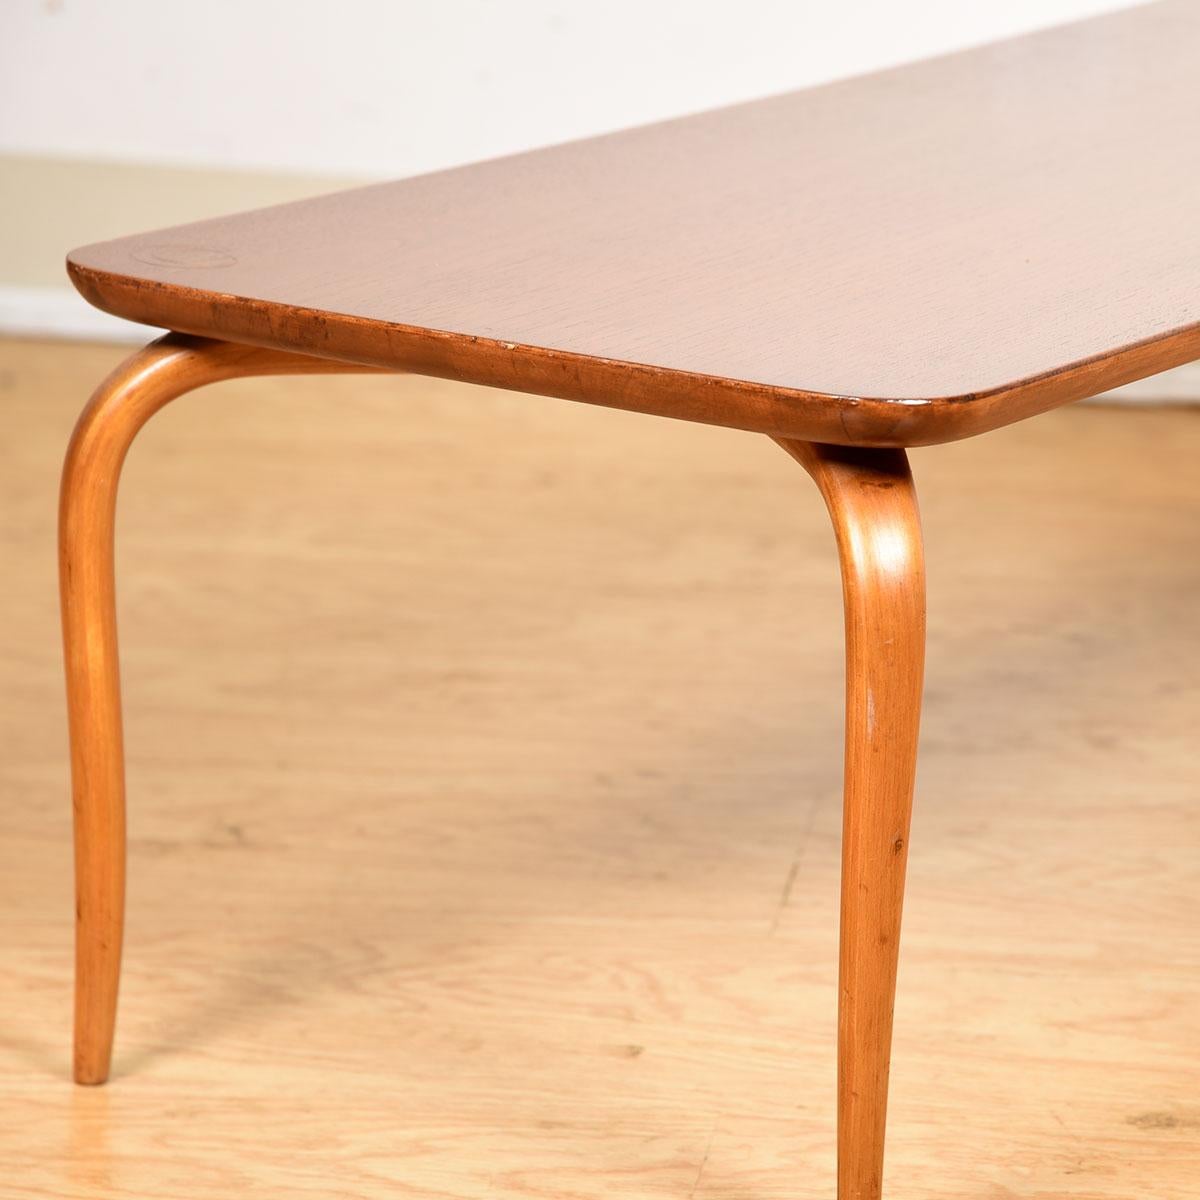 20th Century ‘Long Table’ Swedish Modern Organic-Leg Coffee Table by Bruno Mathsson, 1950s For Sale